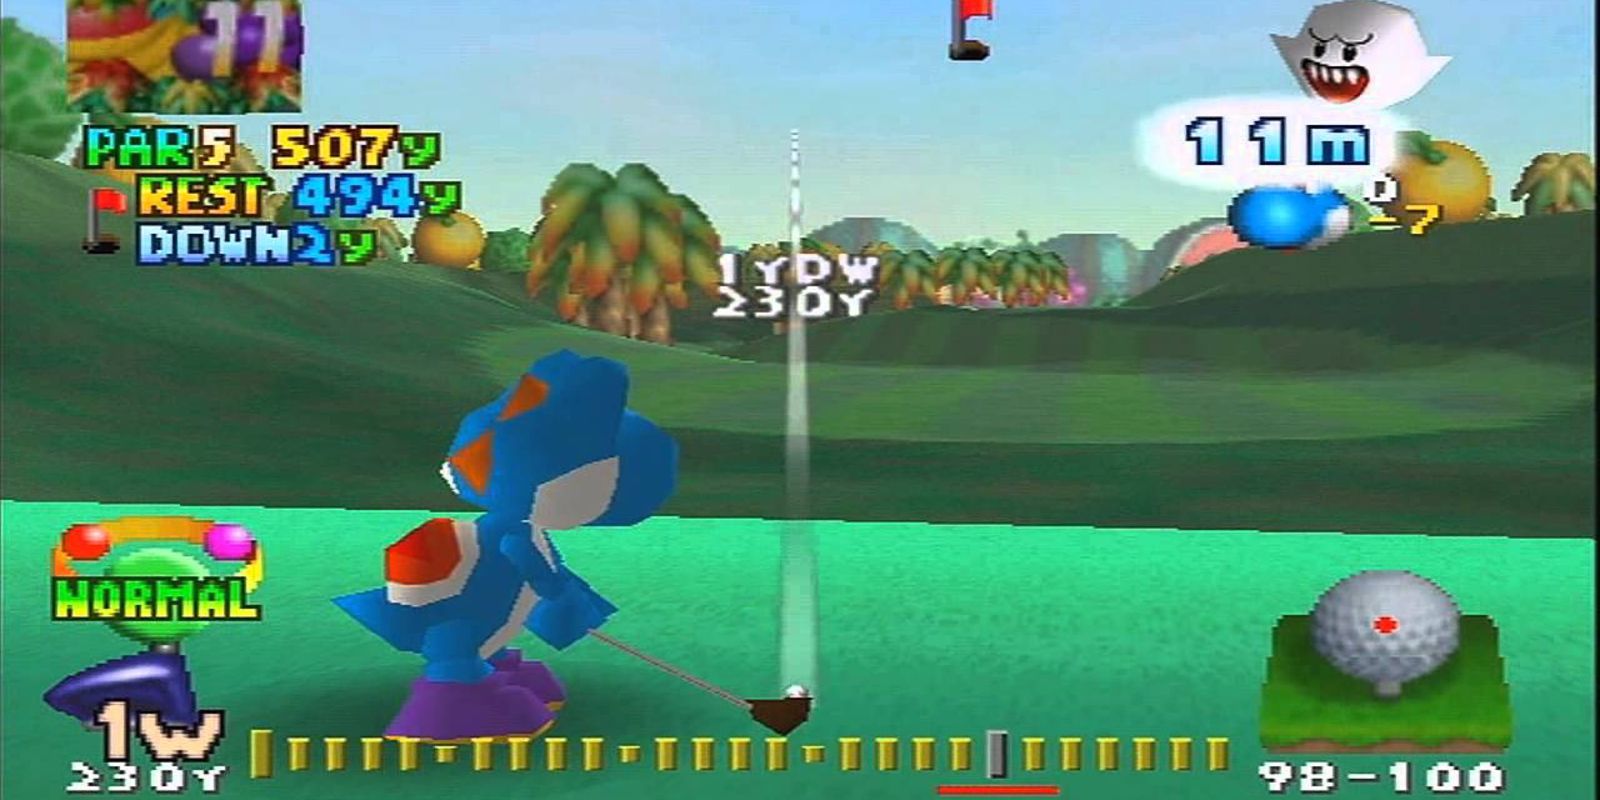 Blue Yoshi lining up a shot in Mario Golf